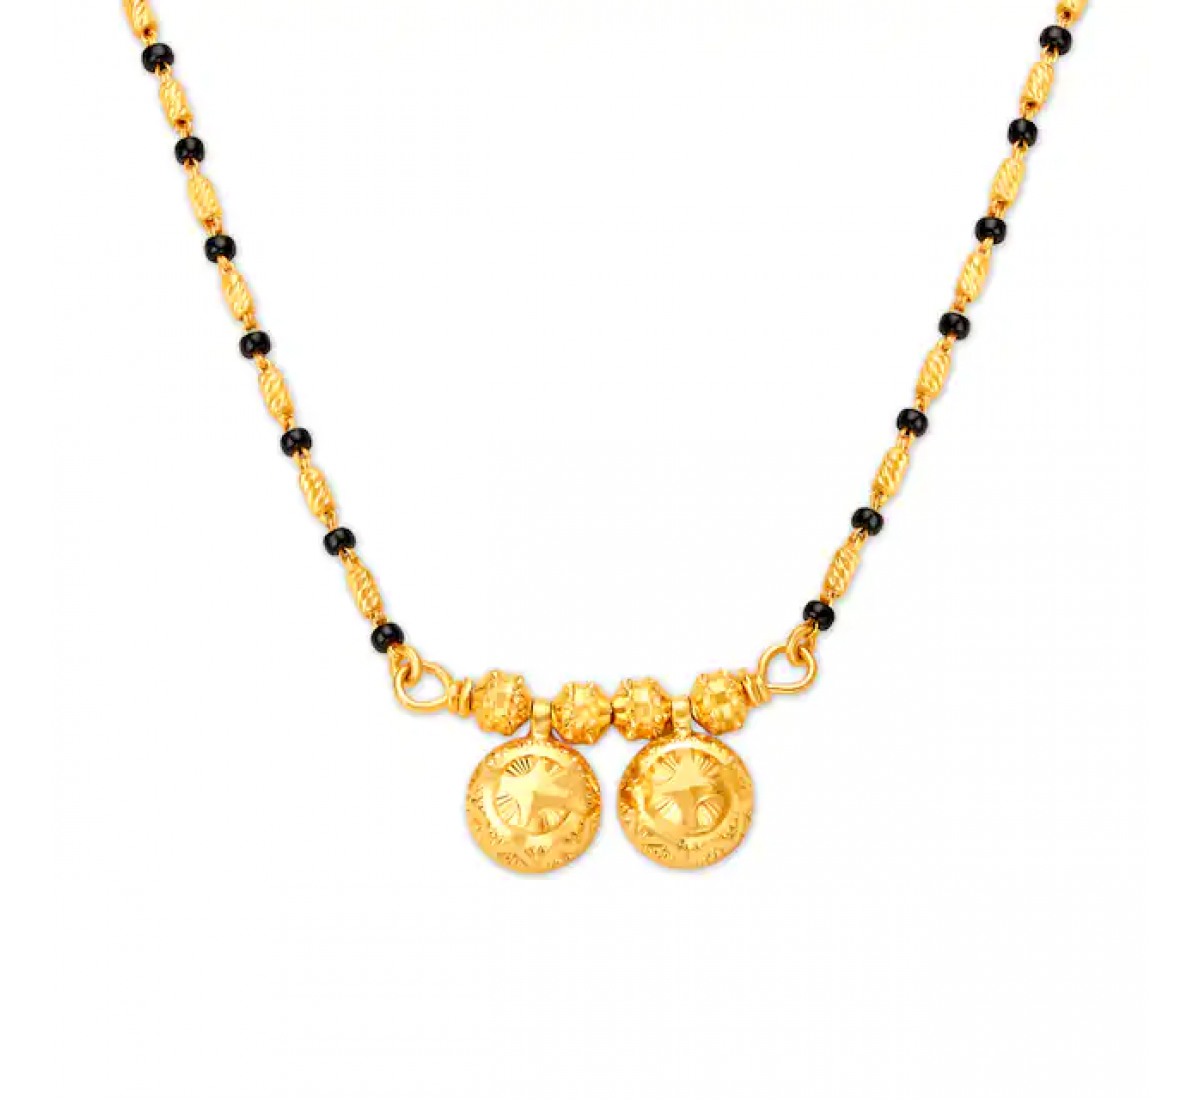 Short mangalsutra | Gold jewellery design necklaces, Gold ring designs, Gold  mangalsutra designs